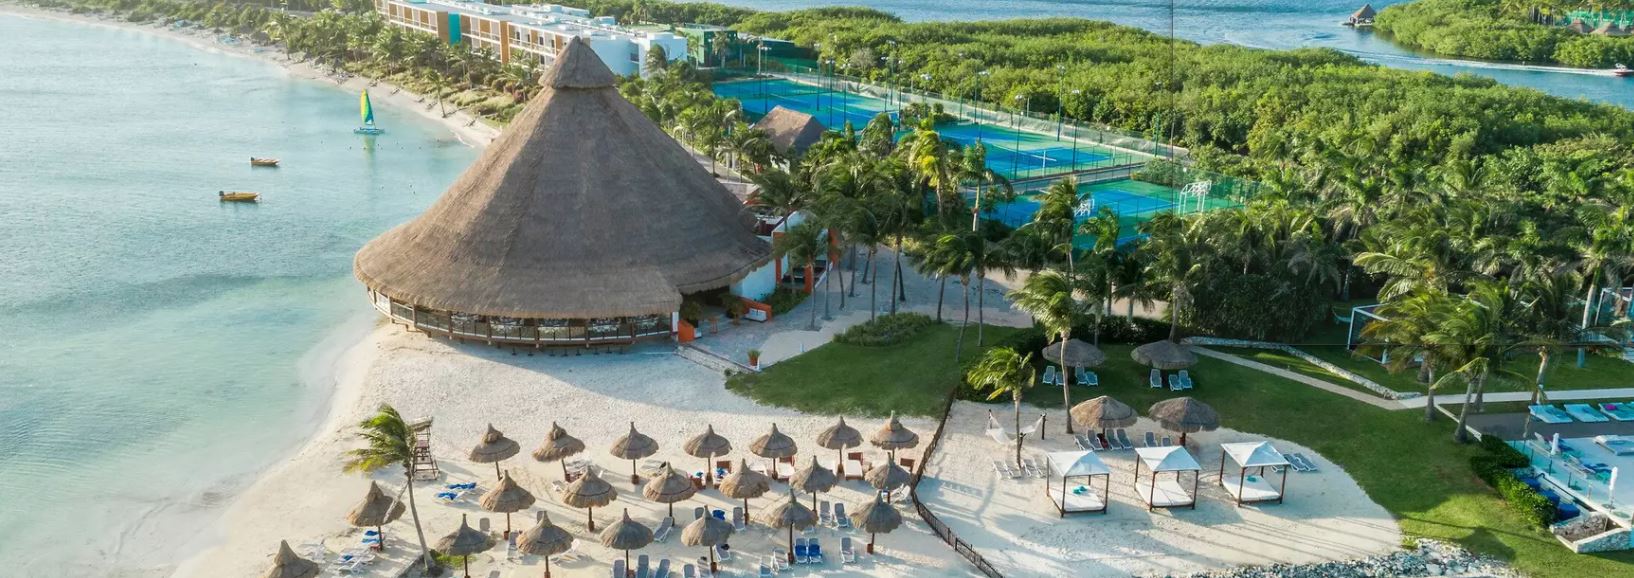 Onde ficar em Cancun, Riviera Maya ou Playa del Carmen